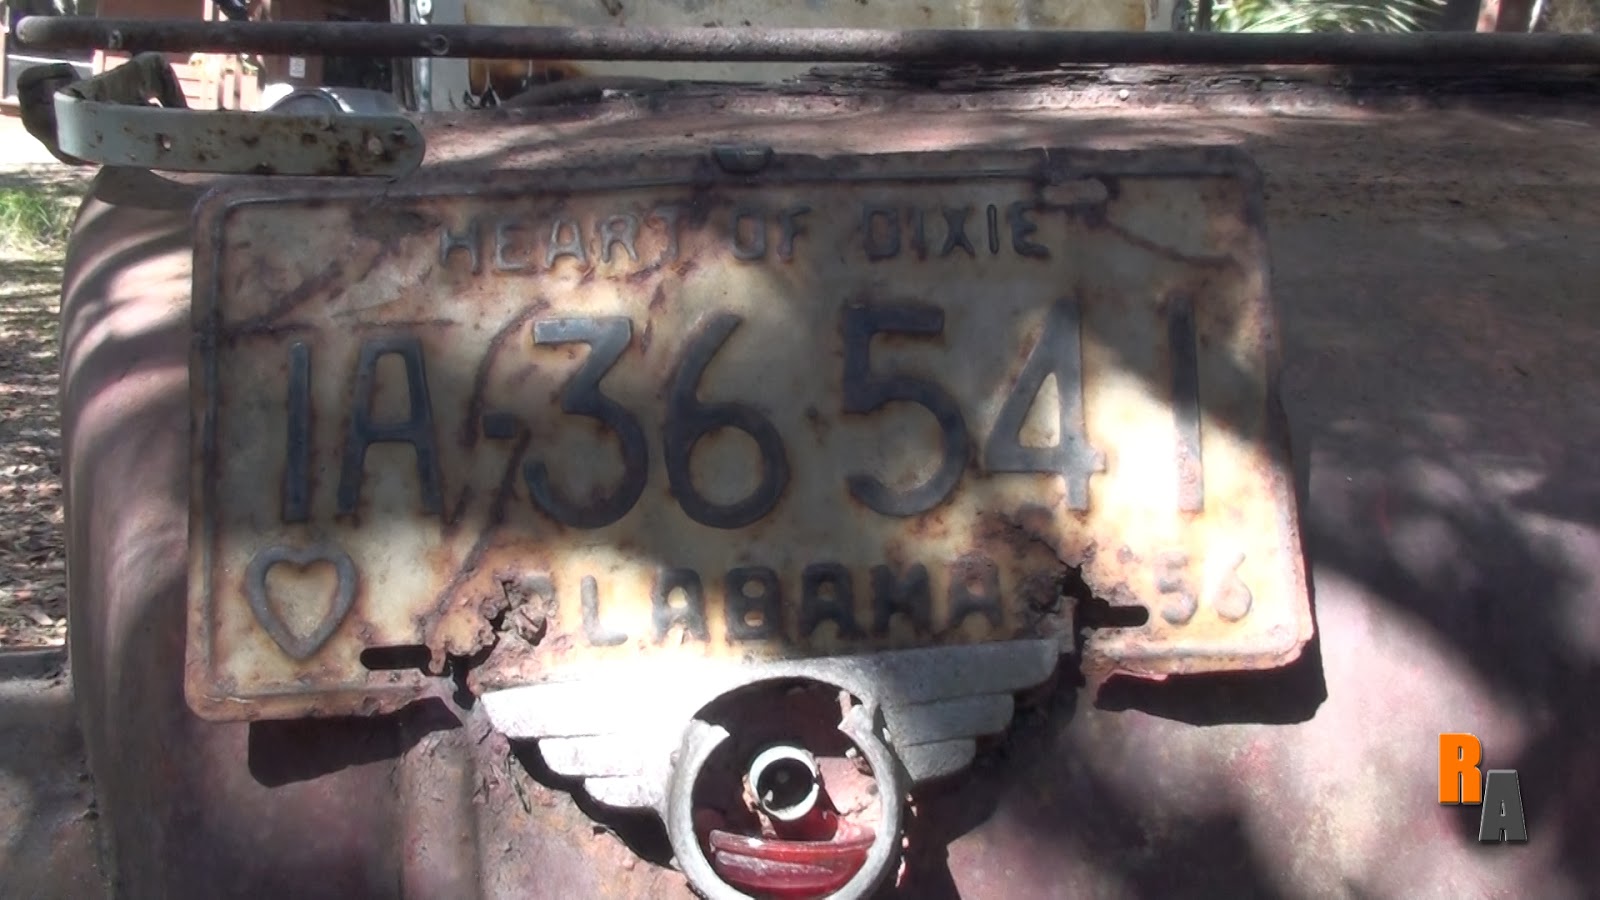 1934 austin 7 central florida abandoned british car